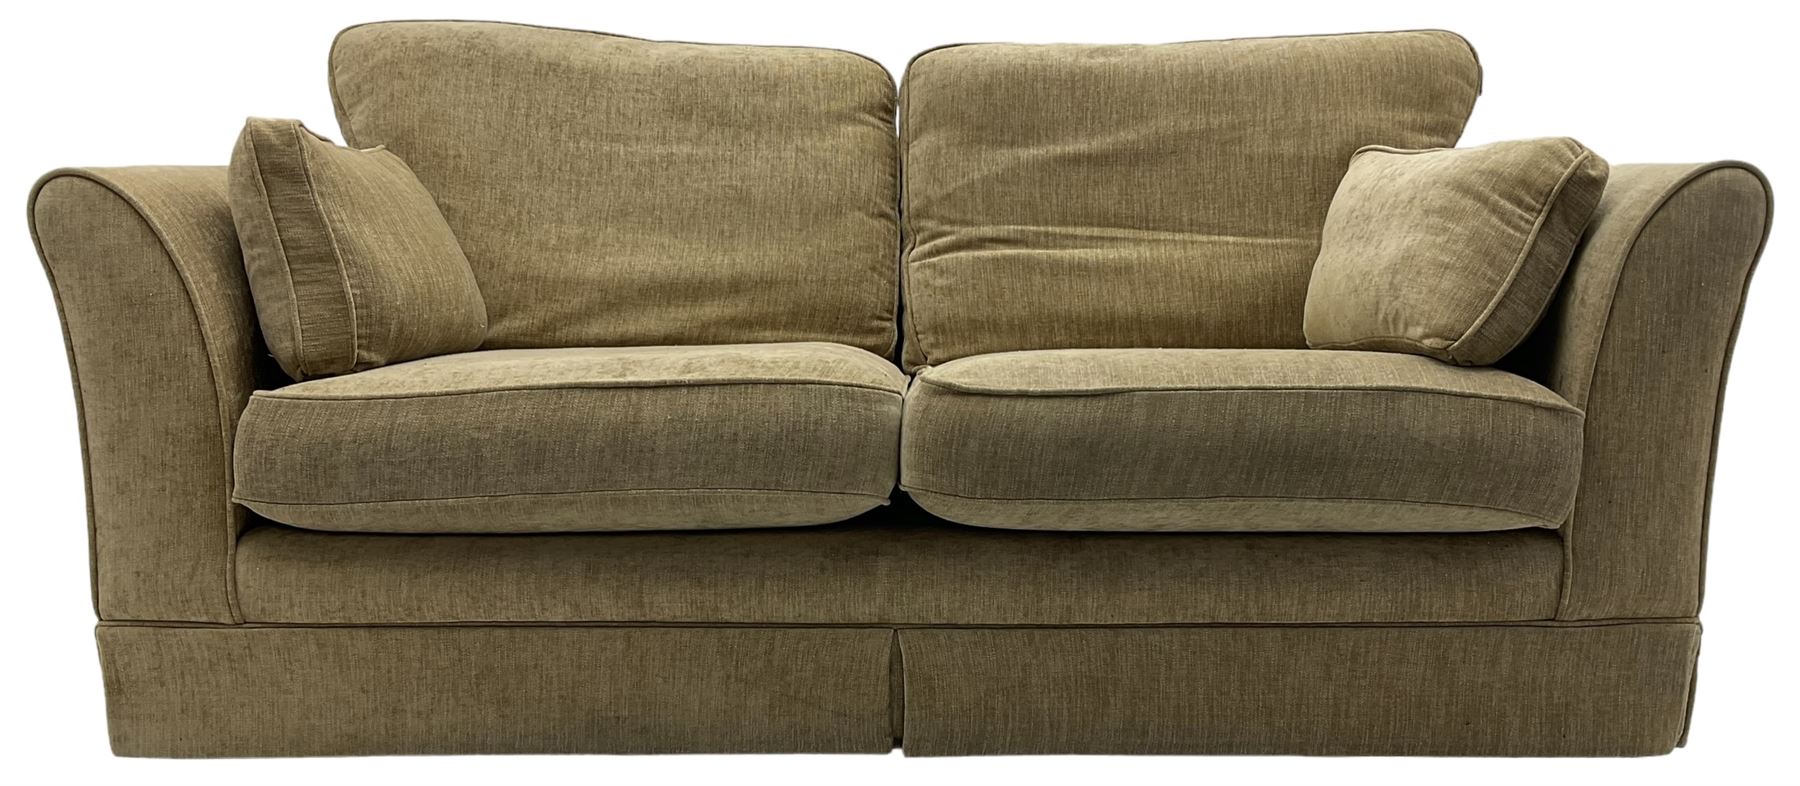 Three seat sofa (W200cm - Image 5 of 9